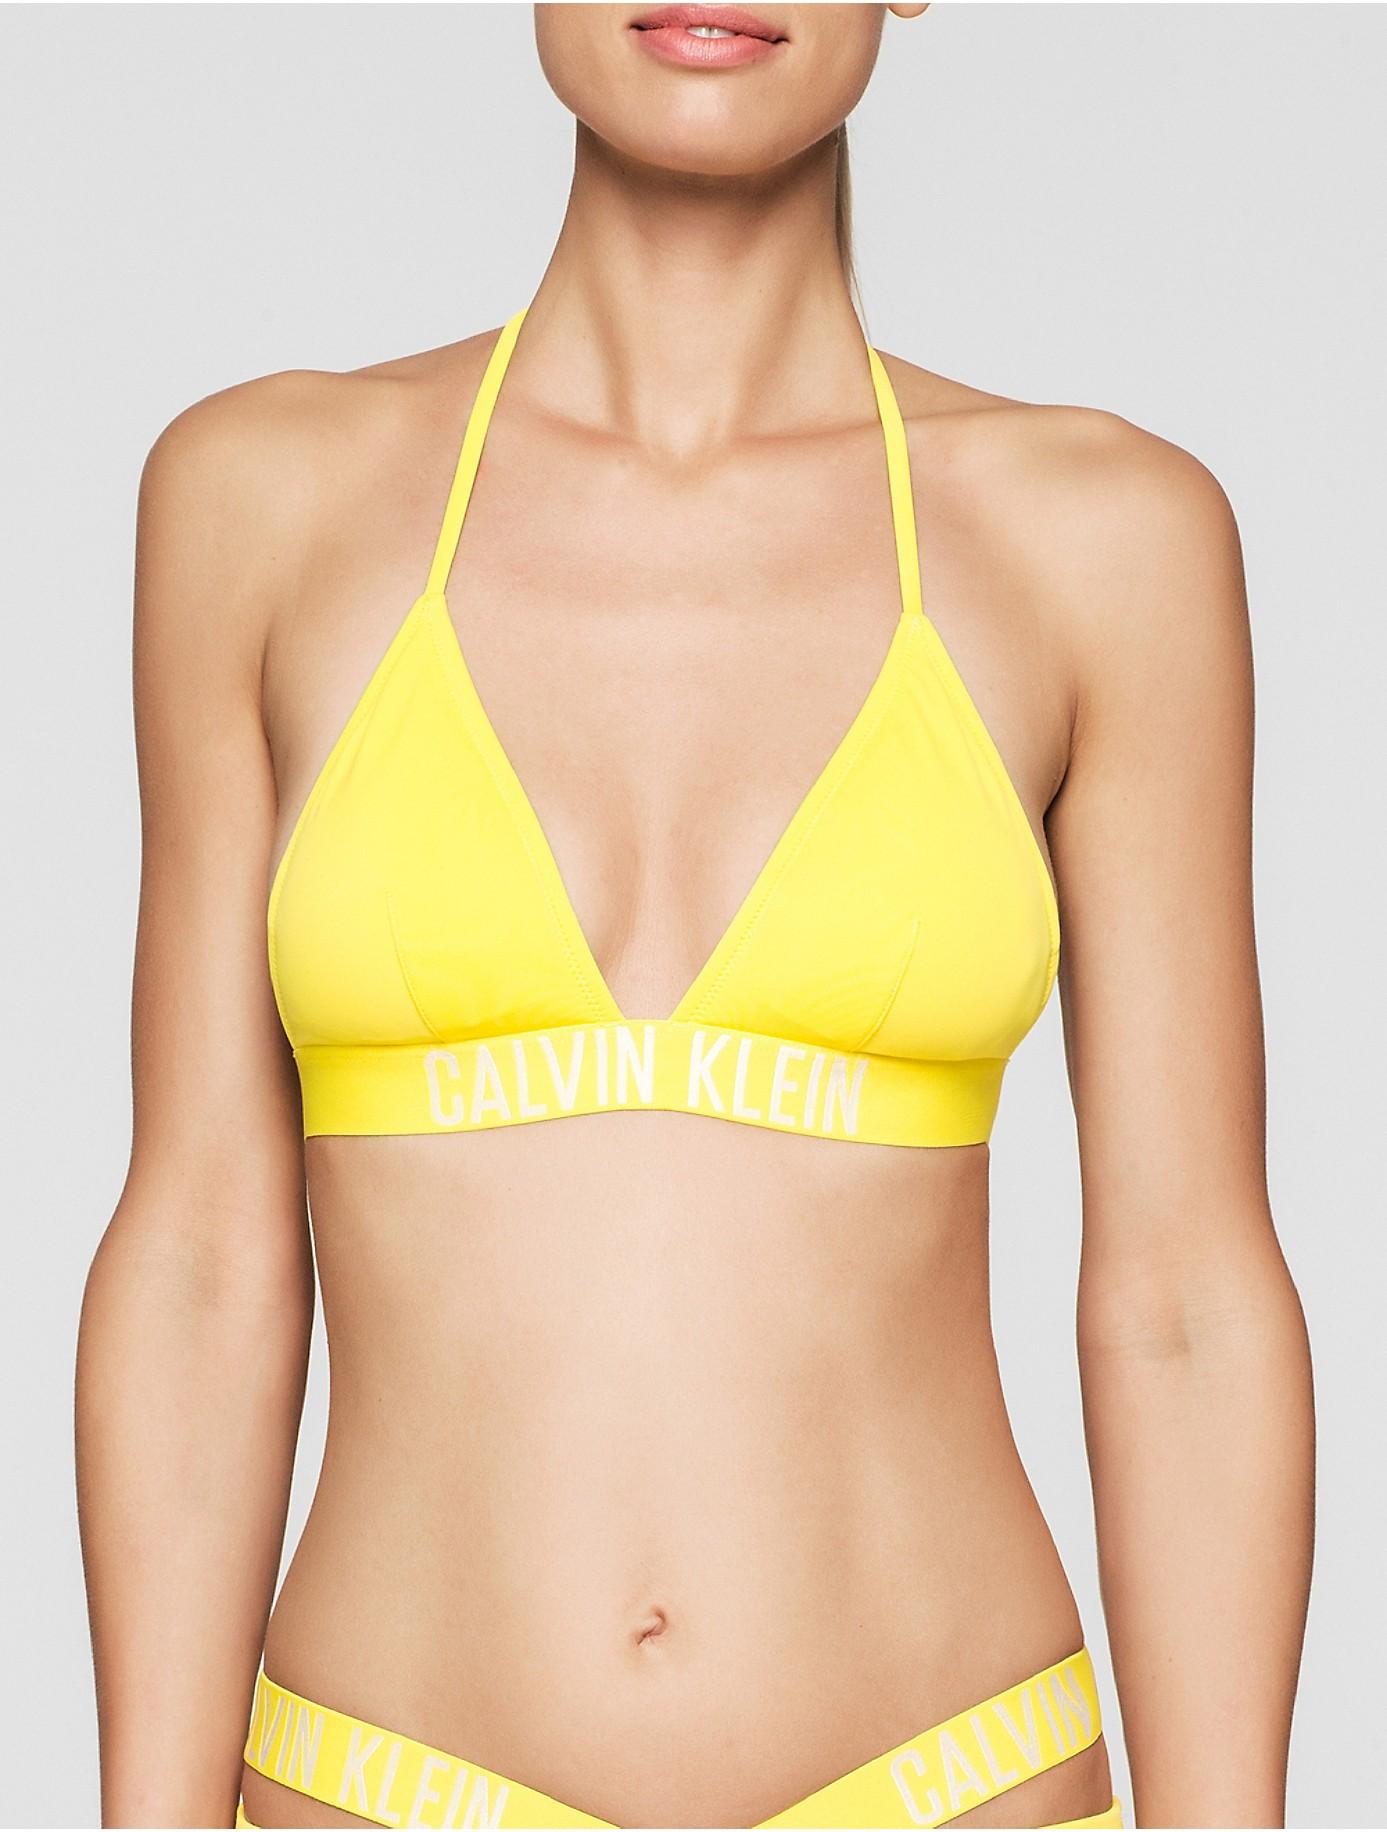 calvin klein yellow bikini top Shop Clothing & Shoes Online